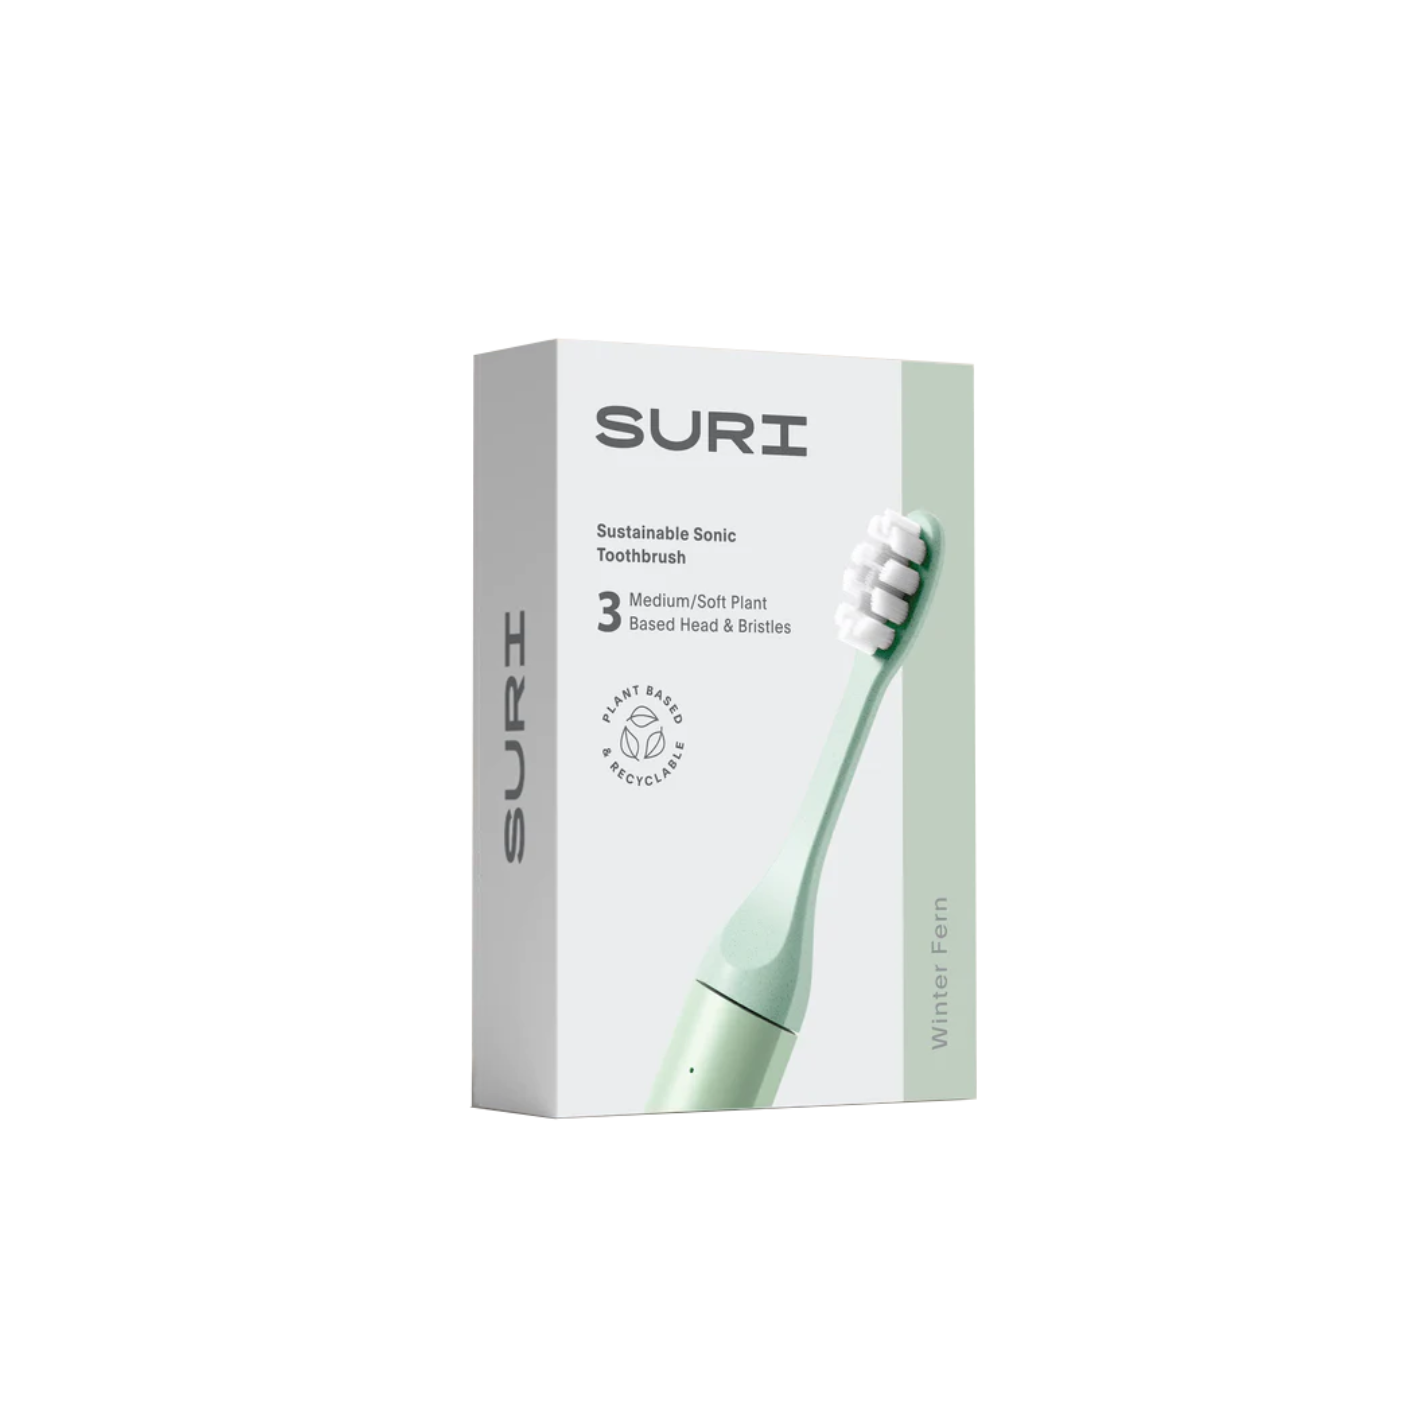 Suri Replacement Toothbrush Heads - 3x